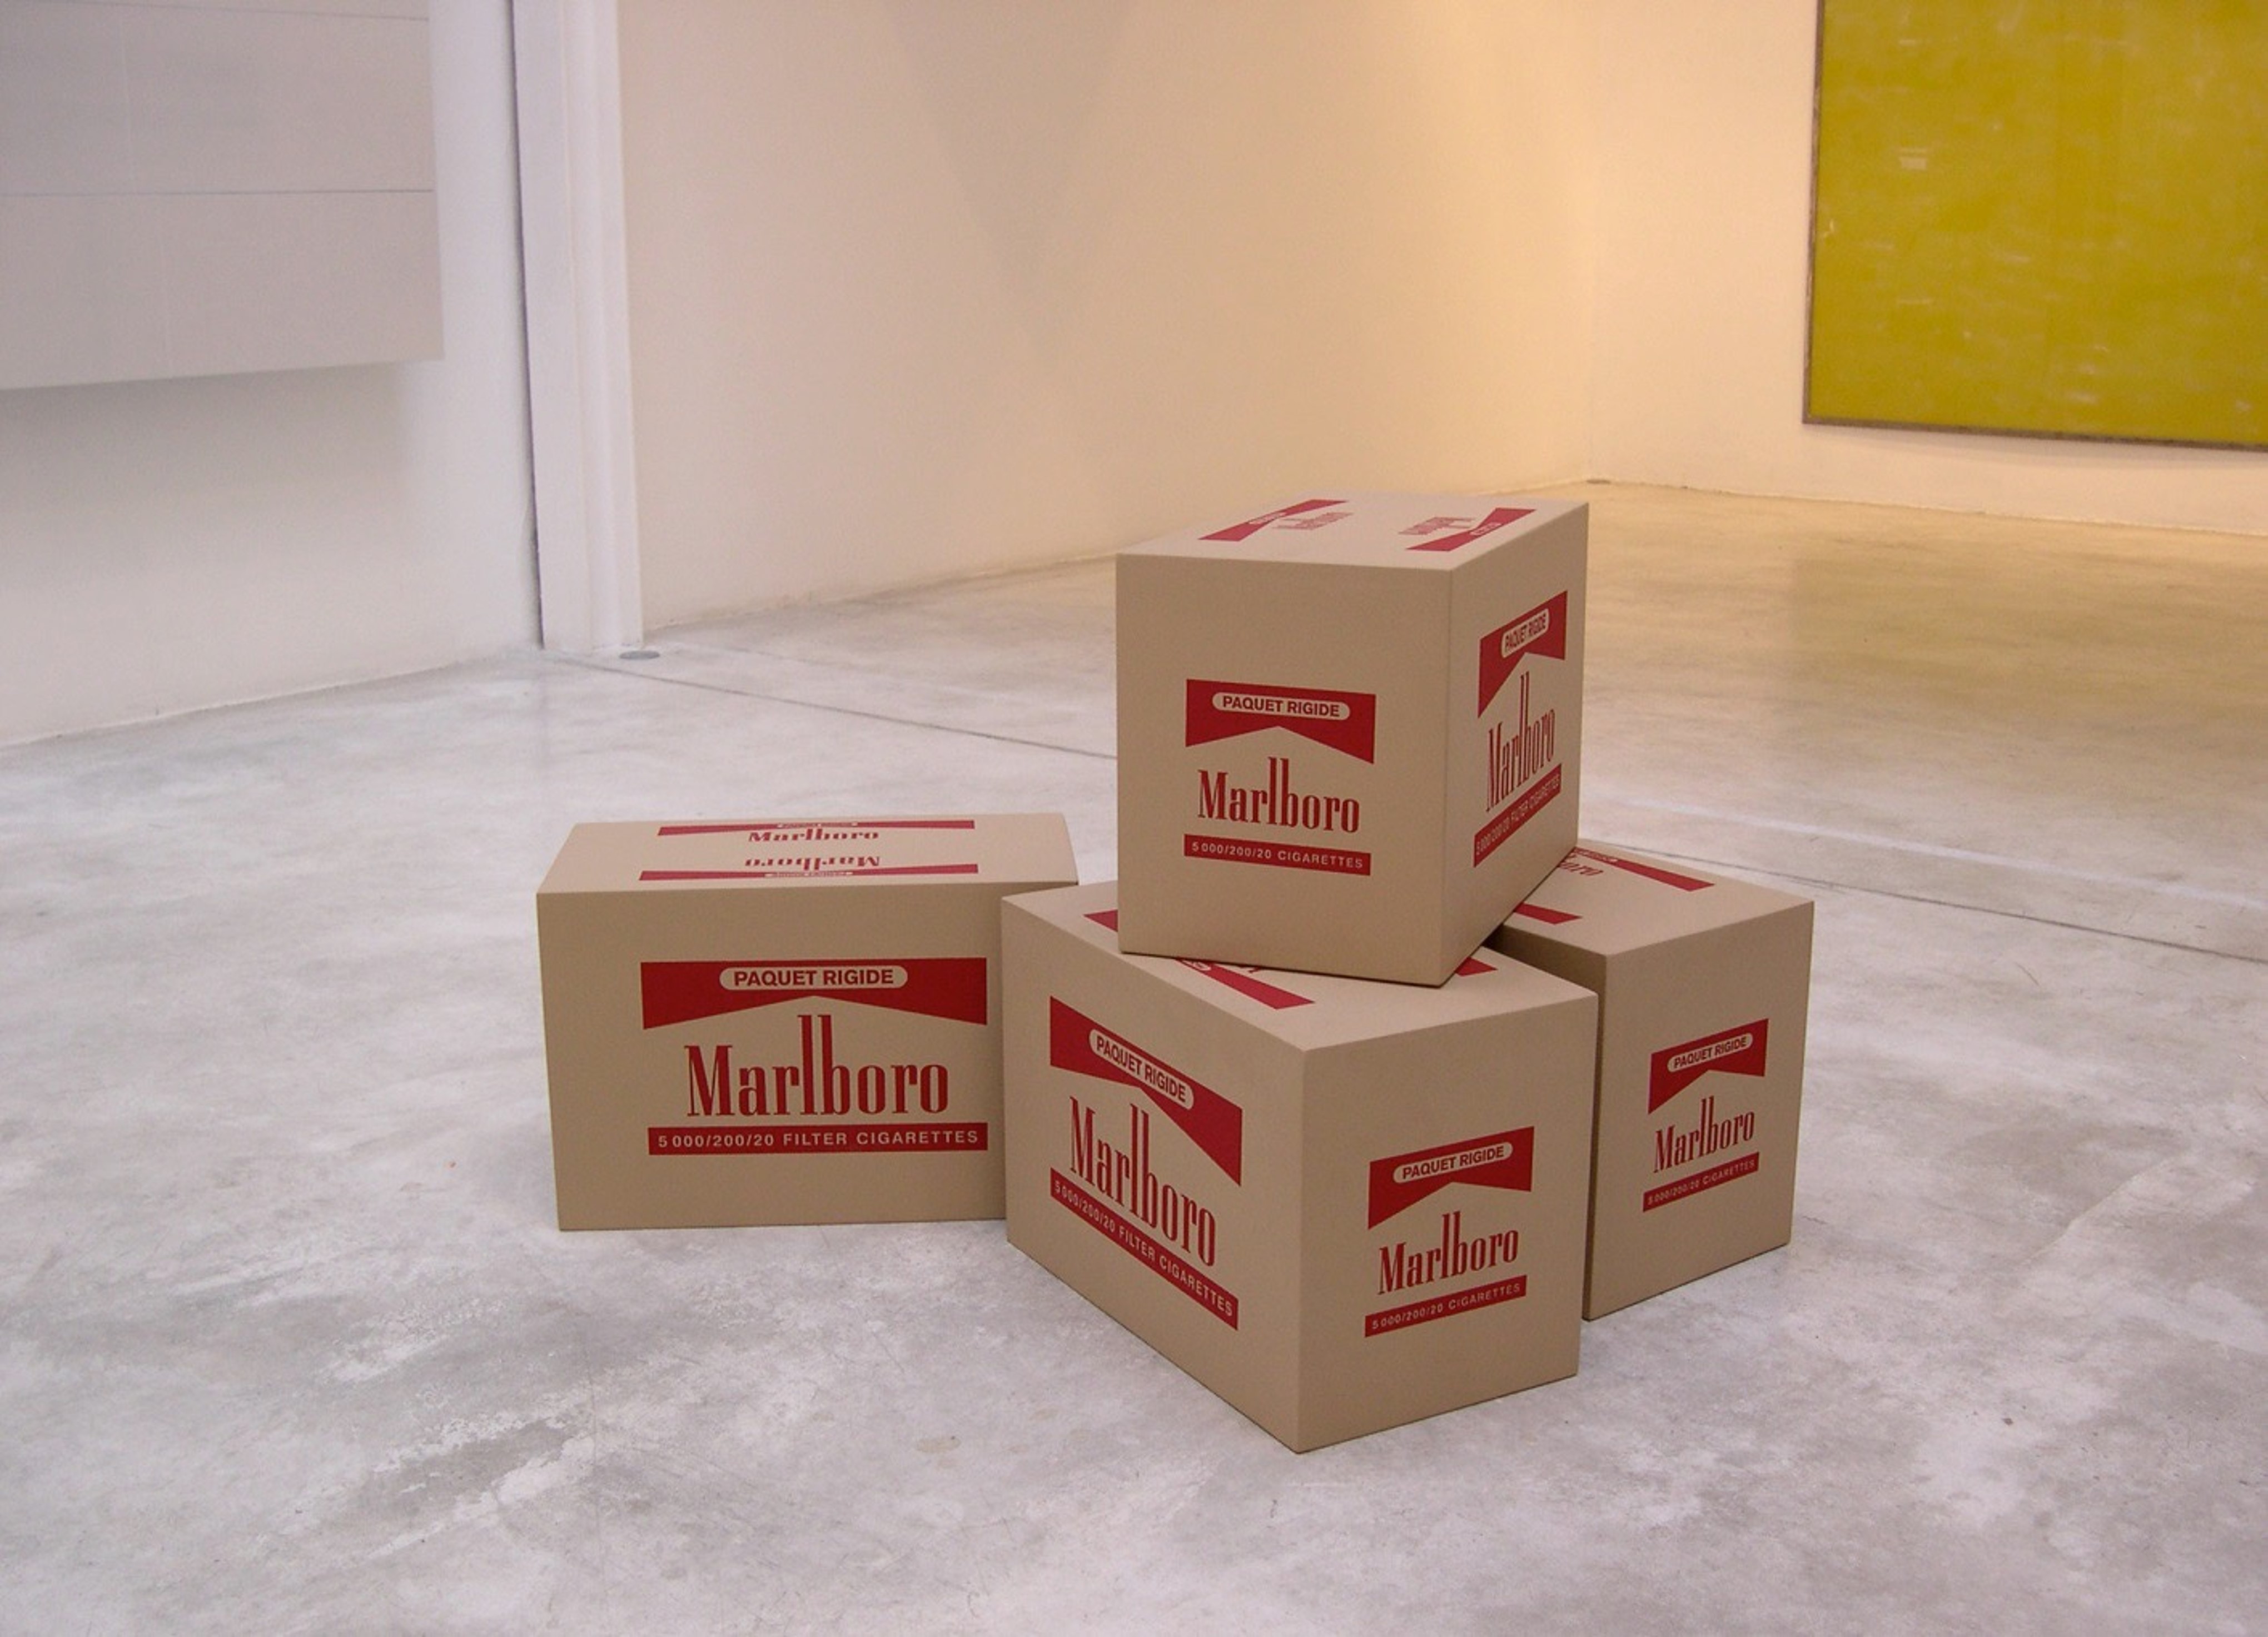 Marlboro Boxes, 2004